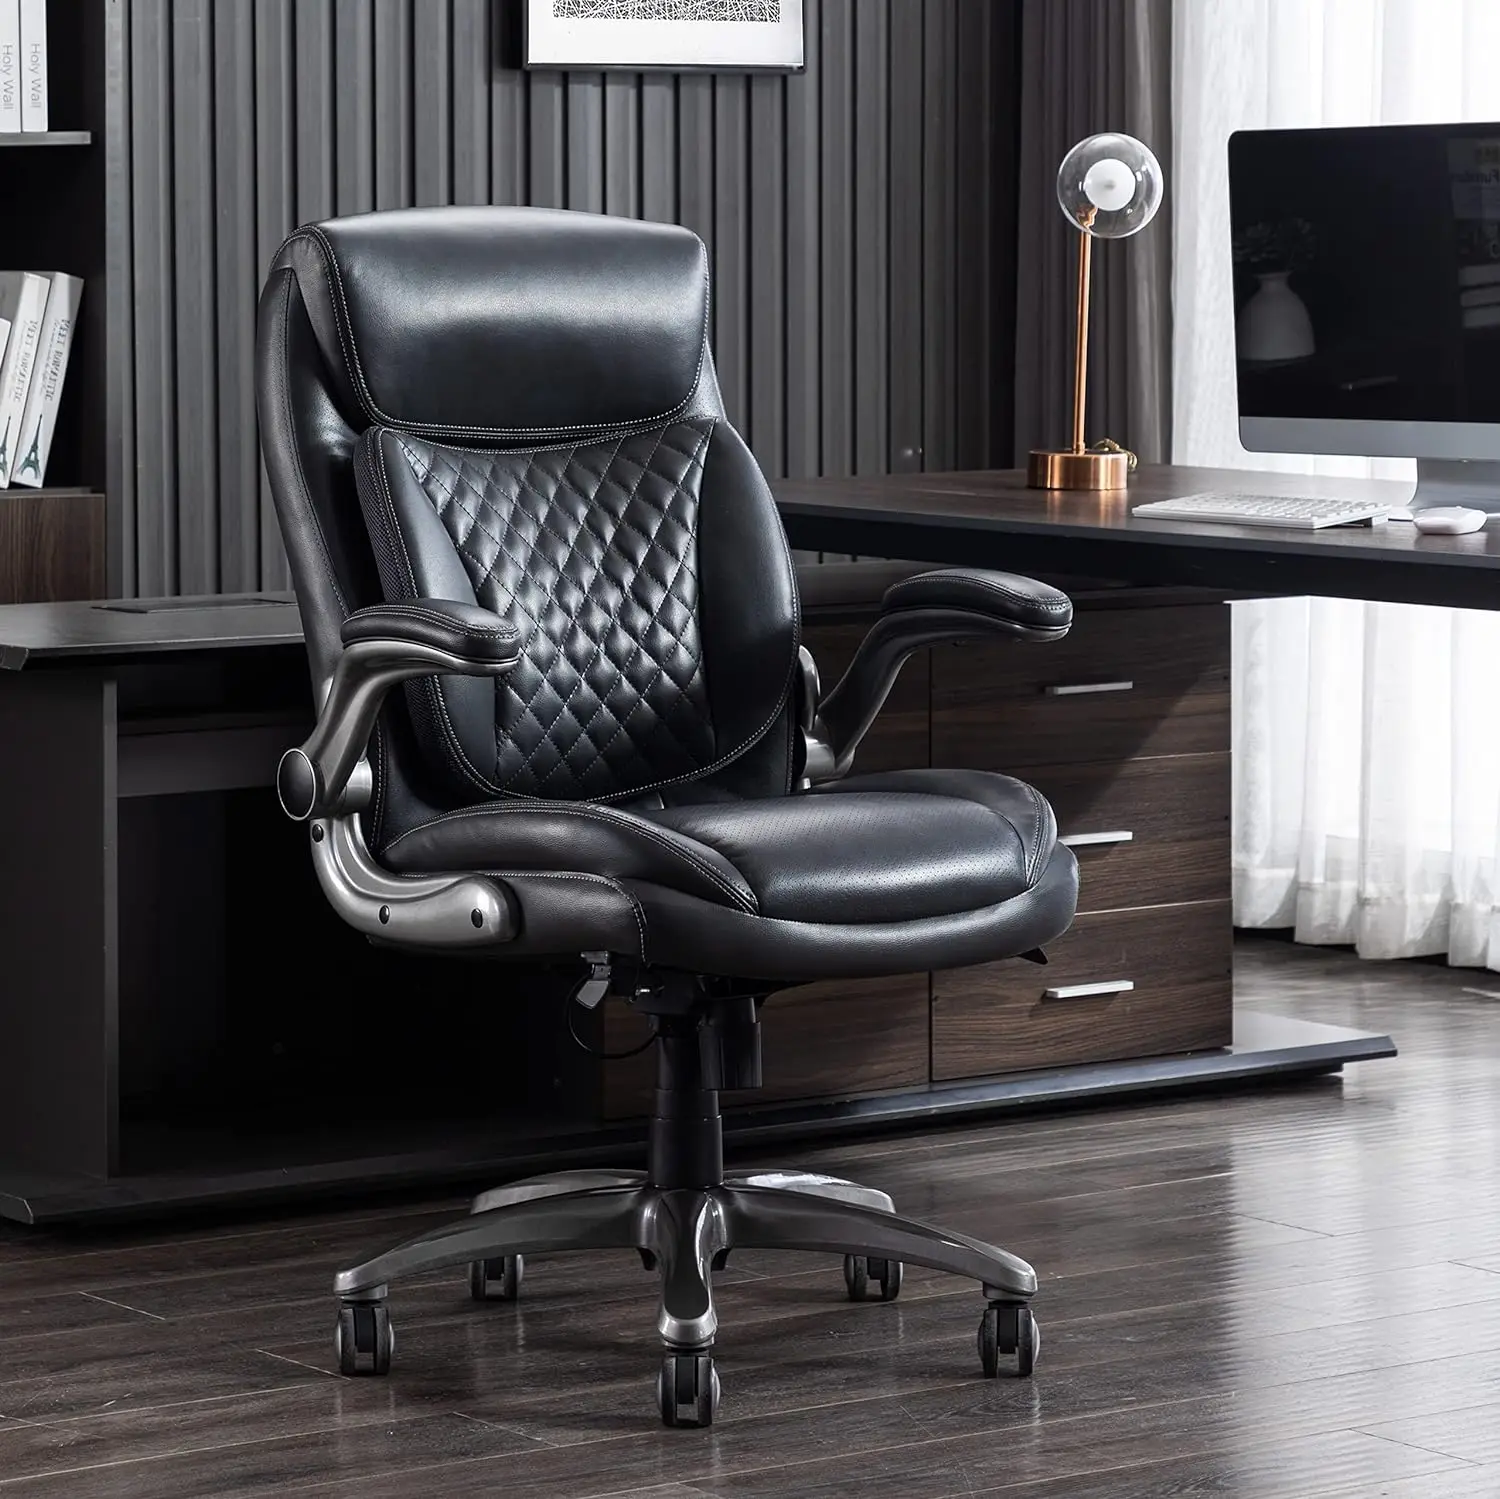 

Basics Ergonomic Executive Office Desk Chair with Flip-up Armrests, Adjustable Height, Tilt and Lumbar Support